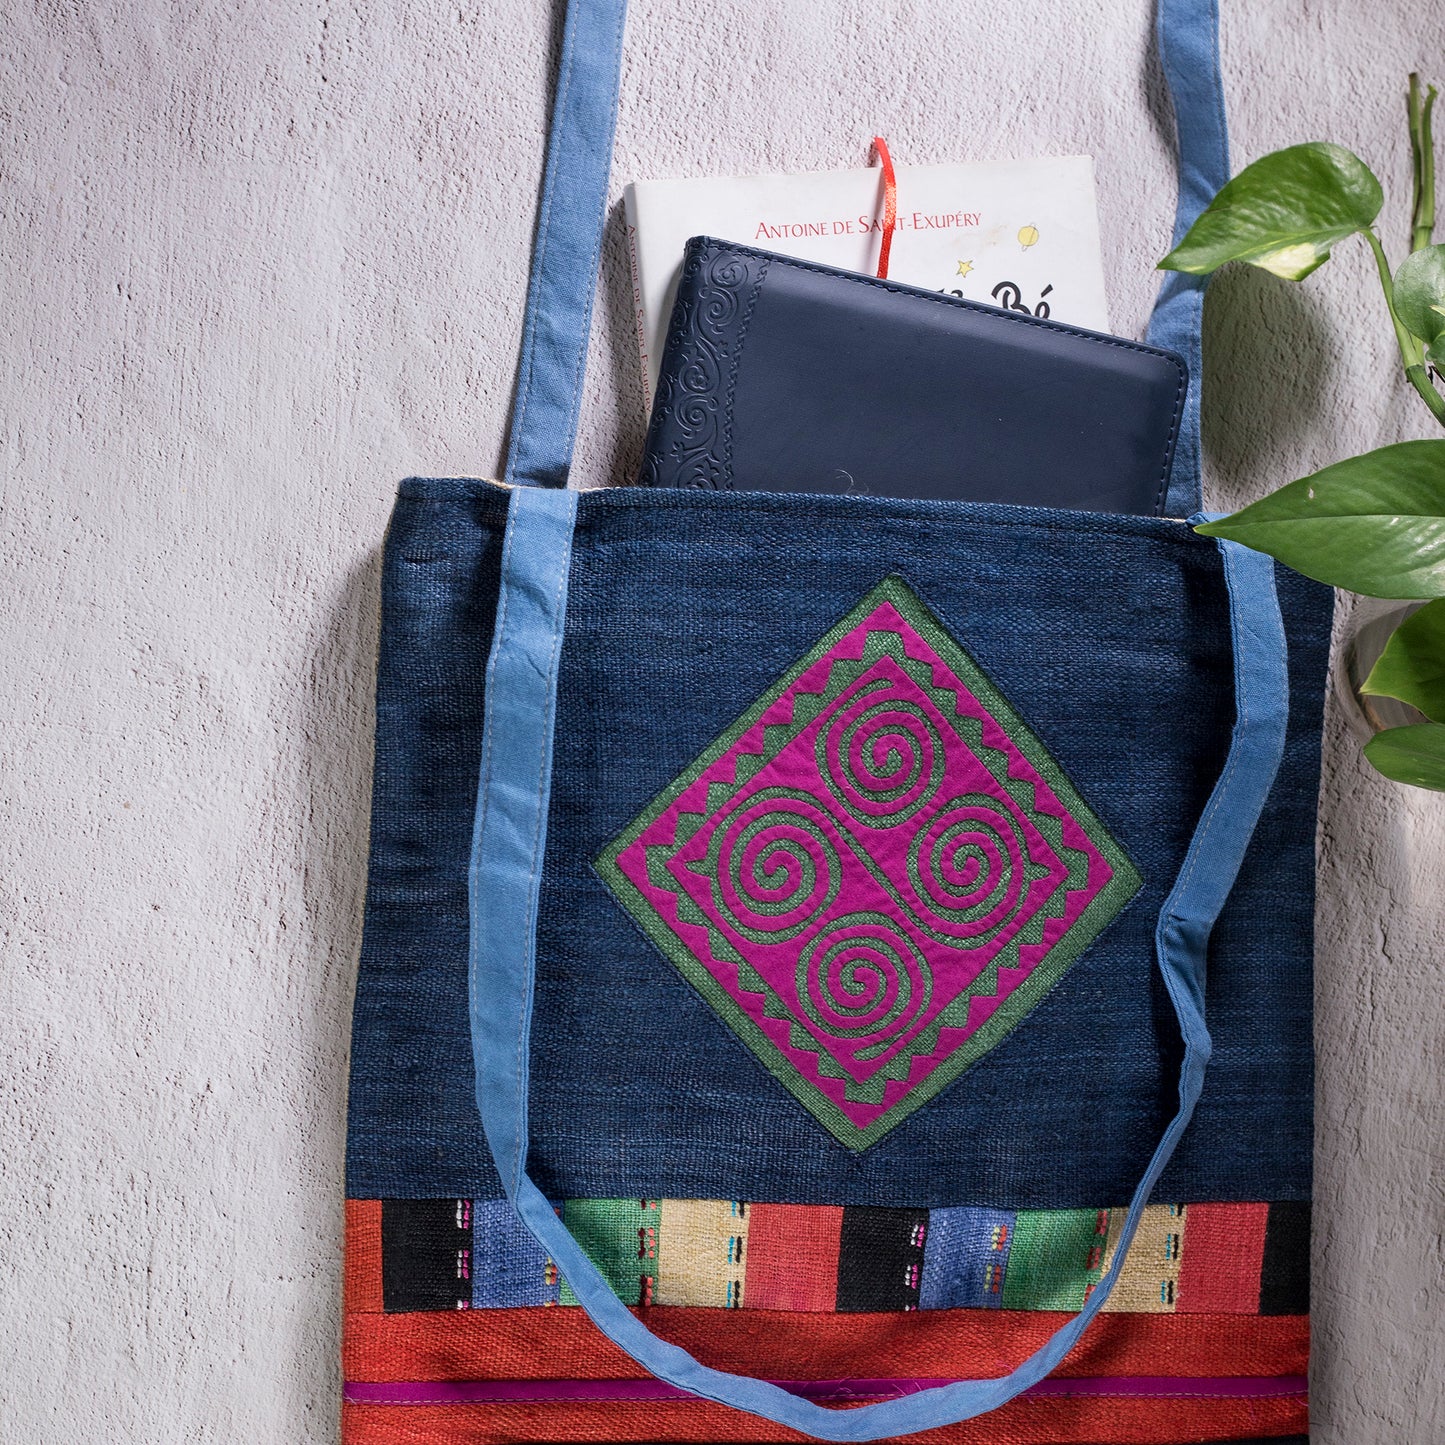 Tote bag, Handwoven Hemp, natural dye in DARK BLUE, H'mong pattern